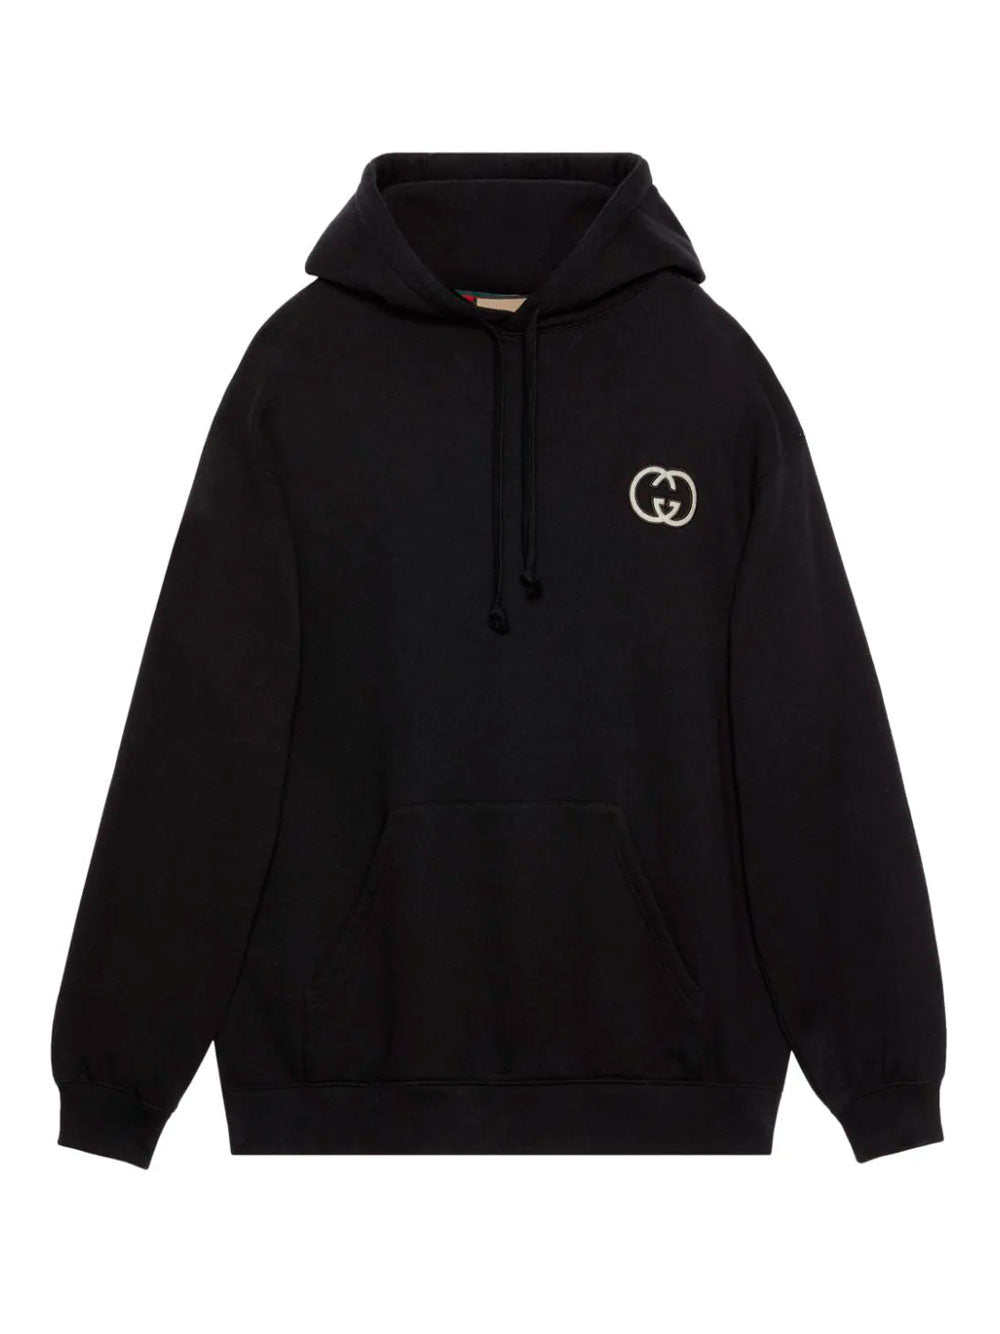 Interlocking G hoodie